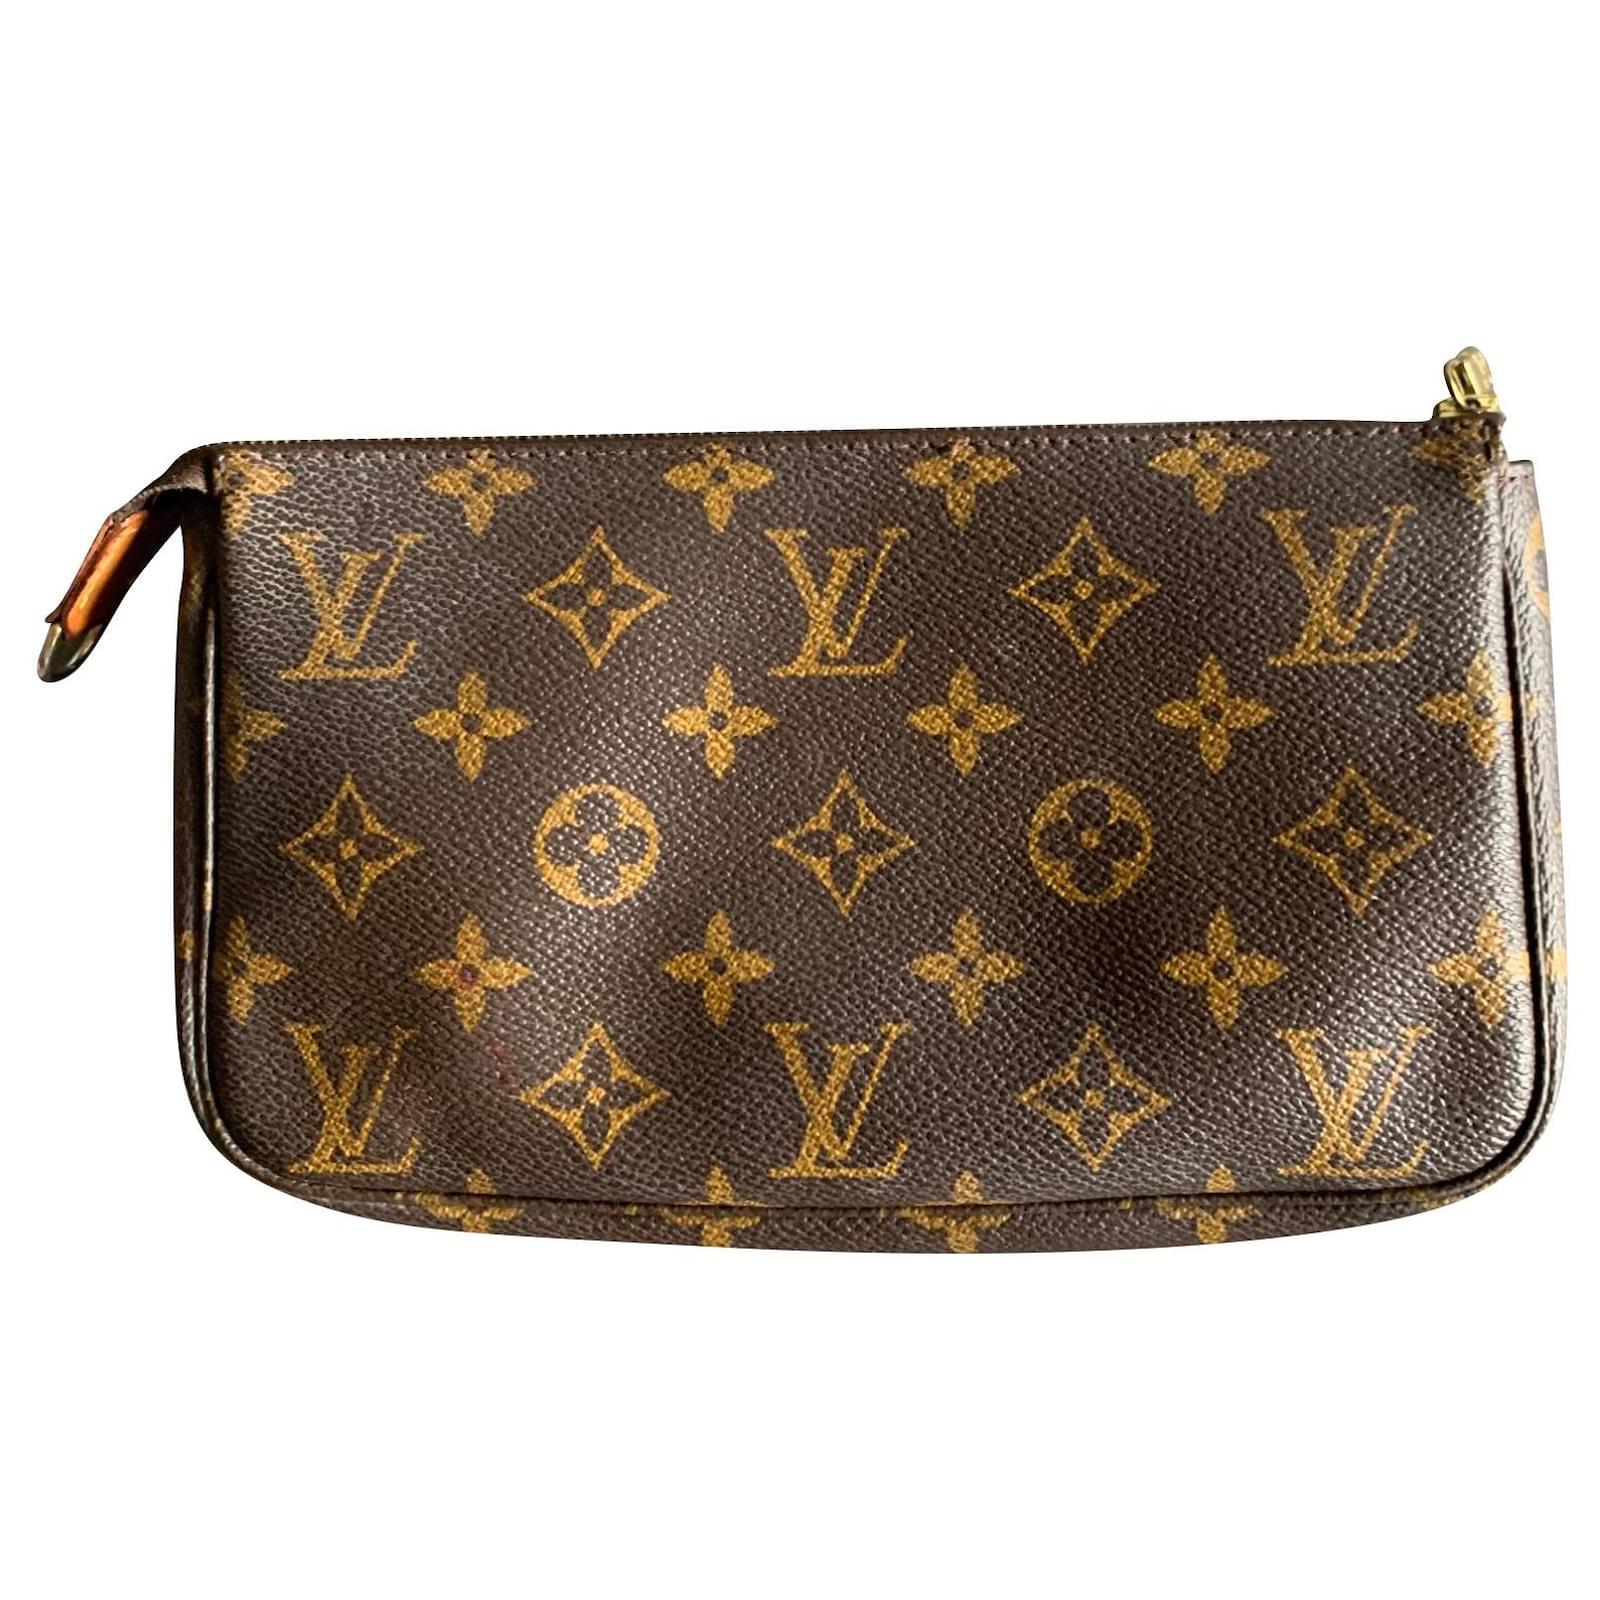 Louis Vuitton - Pochette Accessories NM Epi Leather with Strap